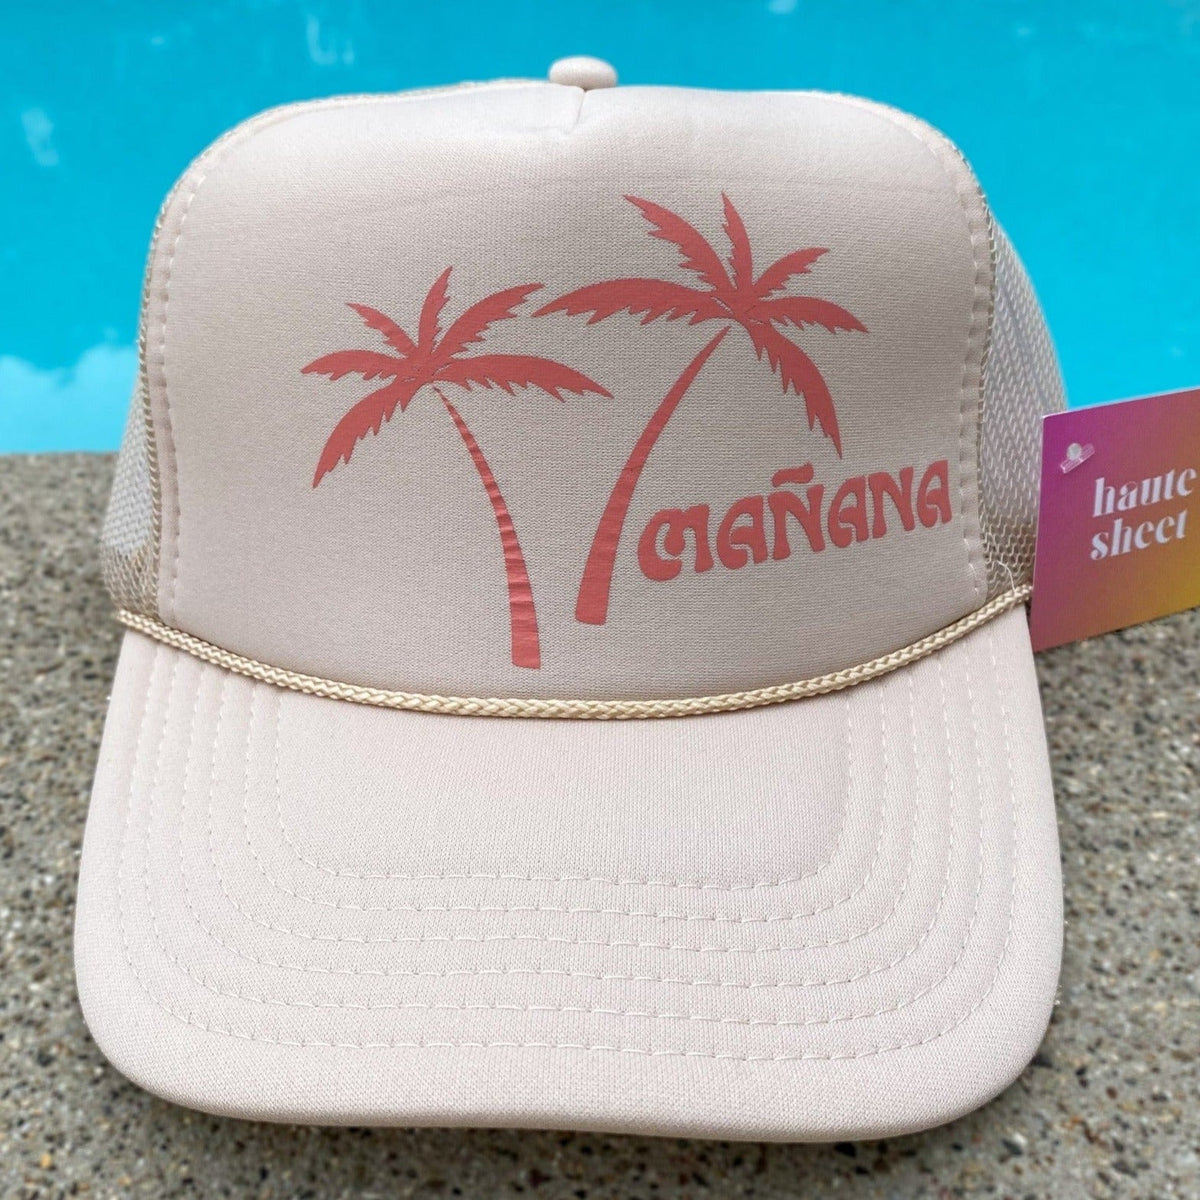 Mañana Palm Tree- Haute Sheet Trucker Hat Hats TheFringeCultureCollective